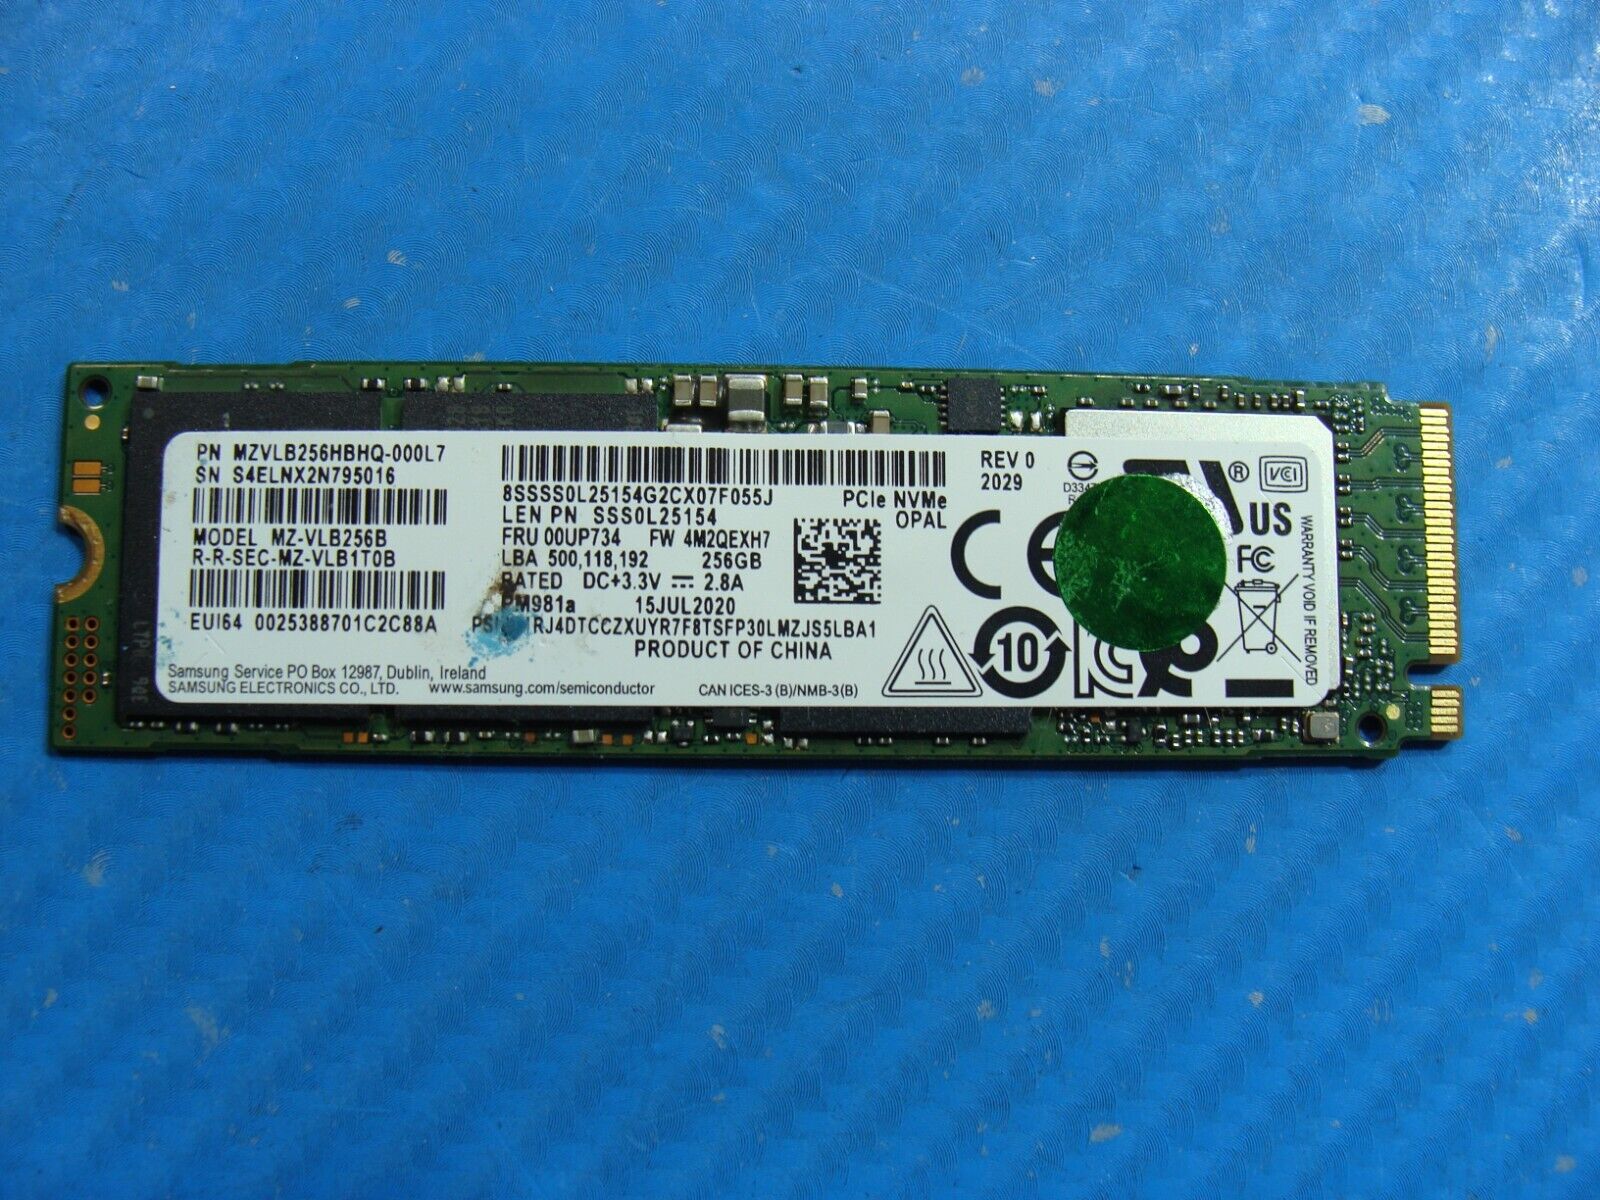 Lenovo T490s Samsung 256GB NVMe M.2 SSD Solid State Drive MZVLB256HBHQ-000L7